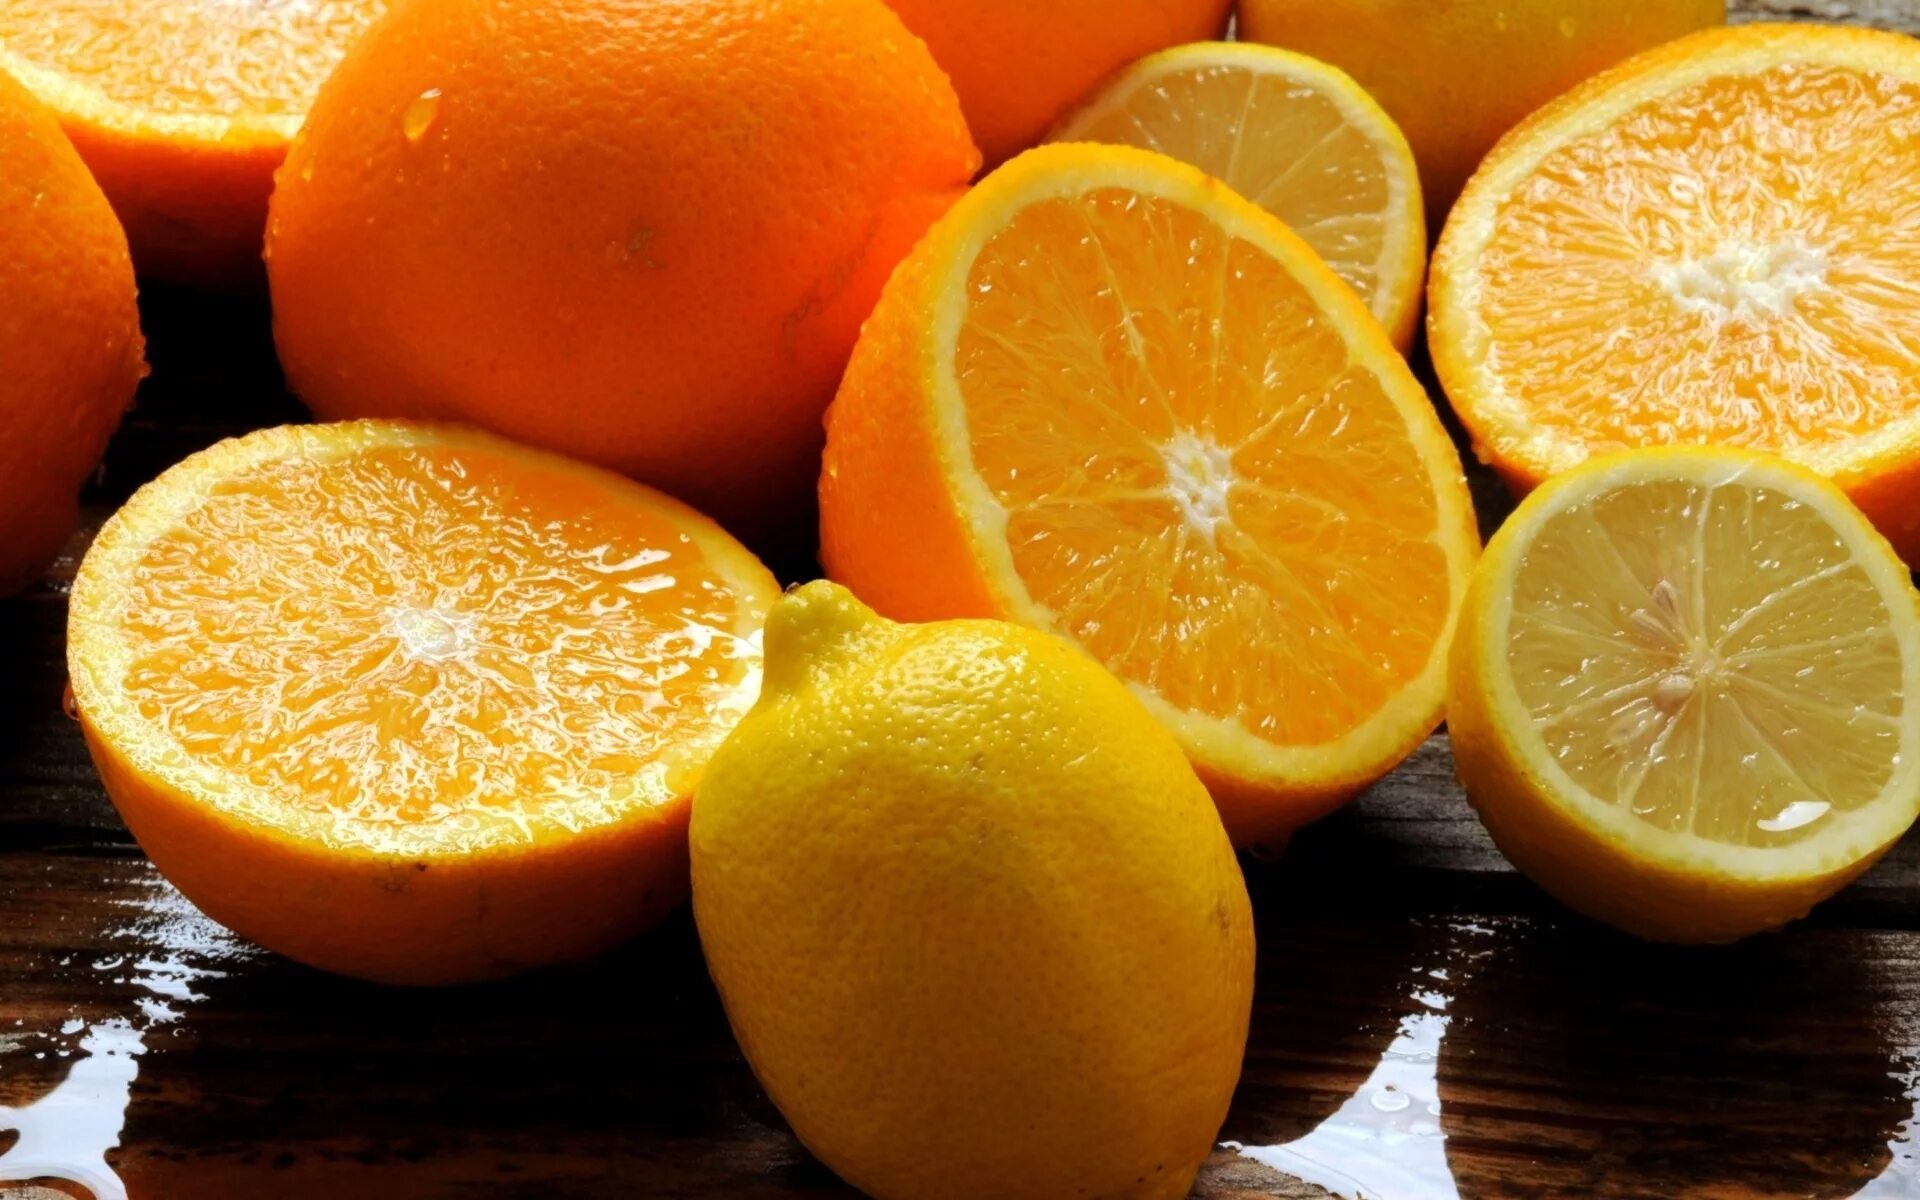 Цитрус (Citrus) – лимон. Апельсин мандарин грейпфрут. Померанец лимон апельсин. Мандарин лимон бергамот. Цитрусовые фрукты это